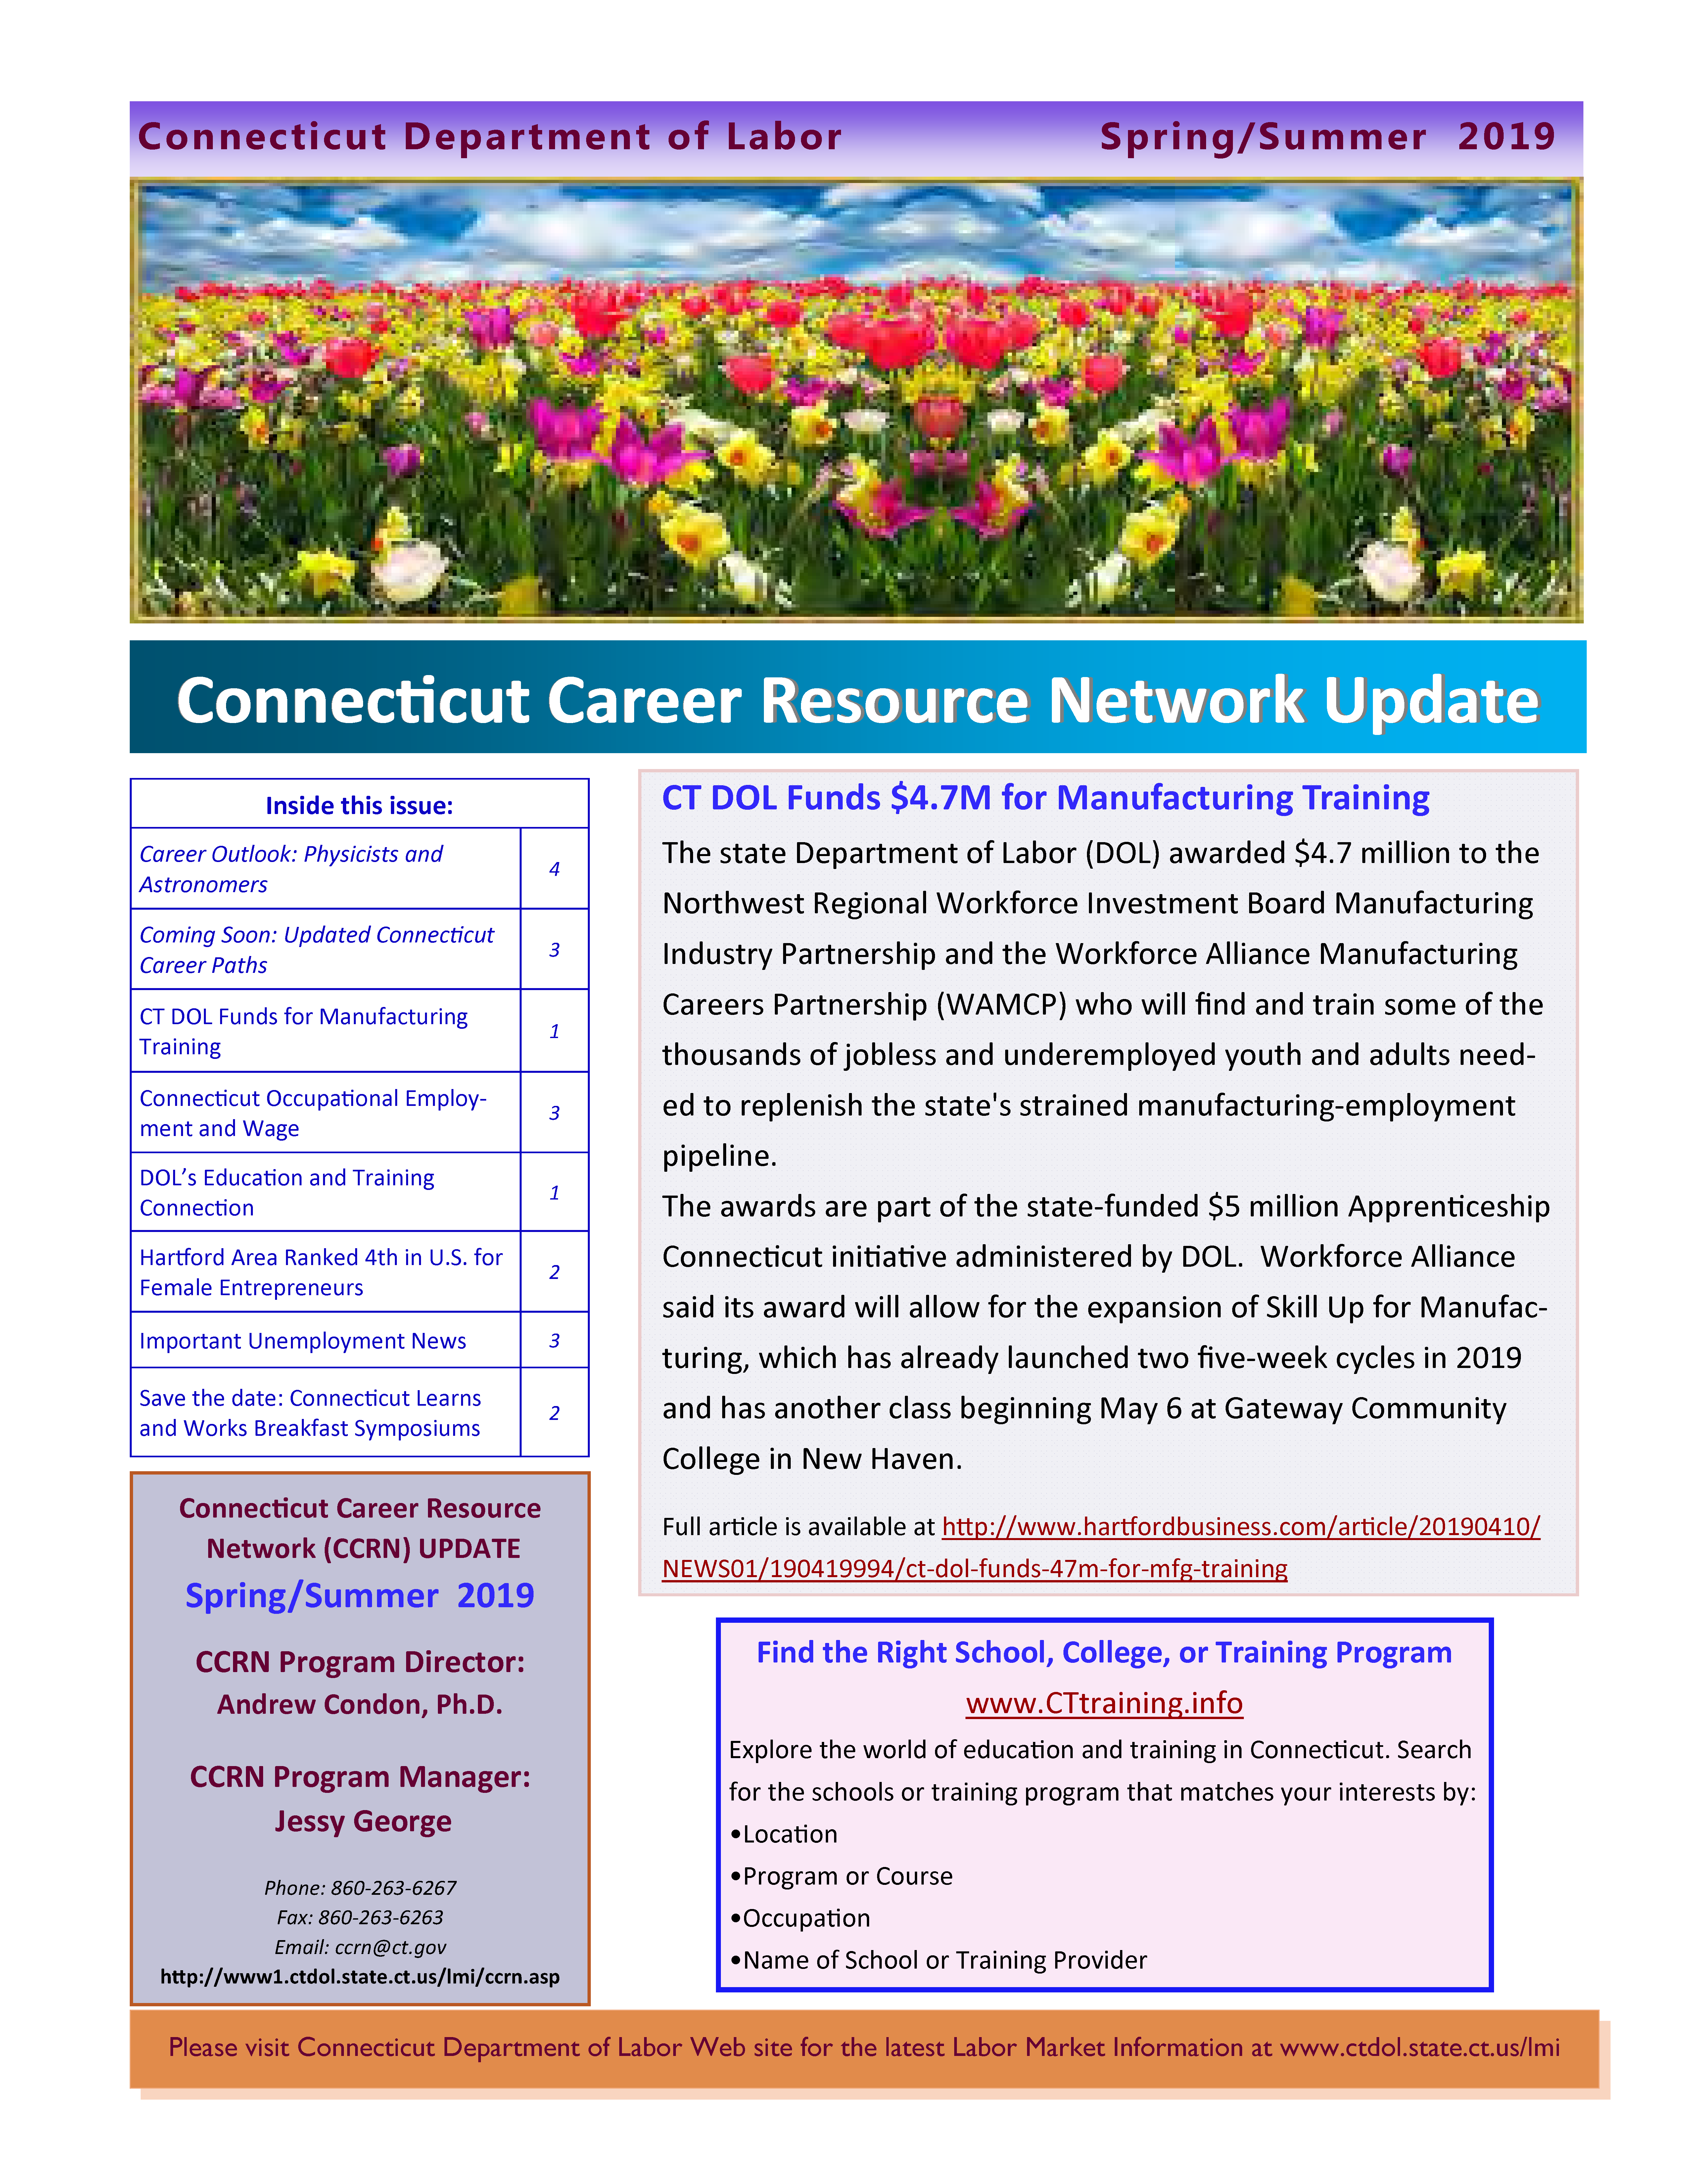 Download Spring/Summer 2019 Connecticut Career Resource Network Update